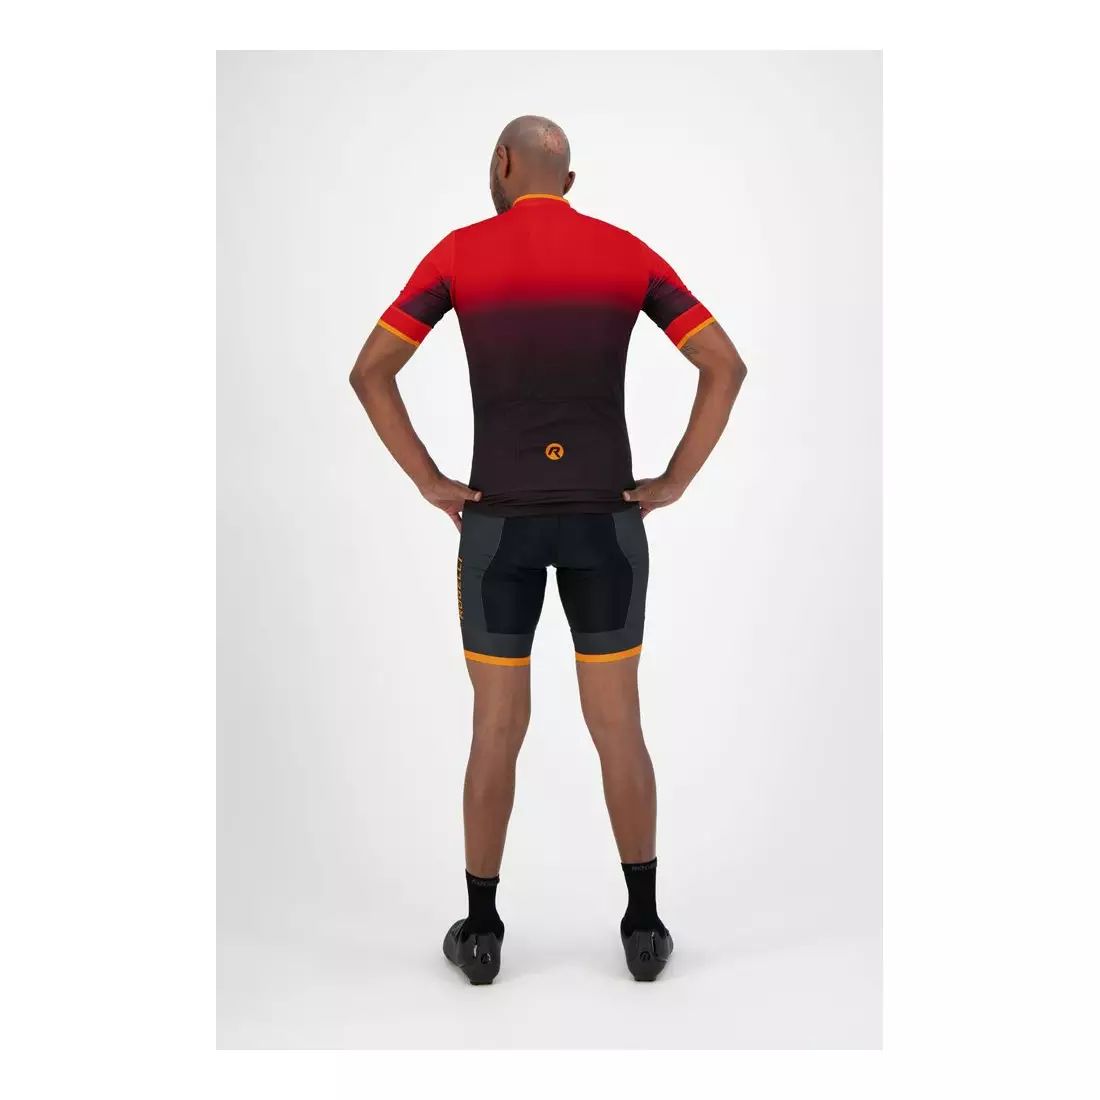 ROGELLI pánske tričko na bicykel HORIZON orange/red